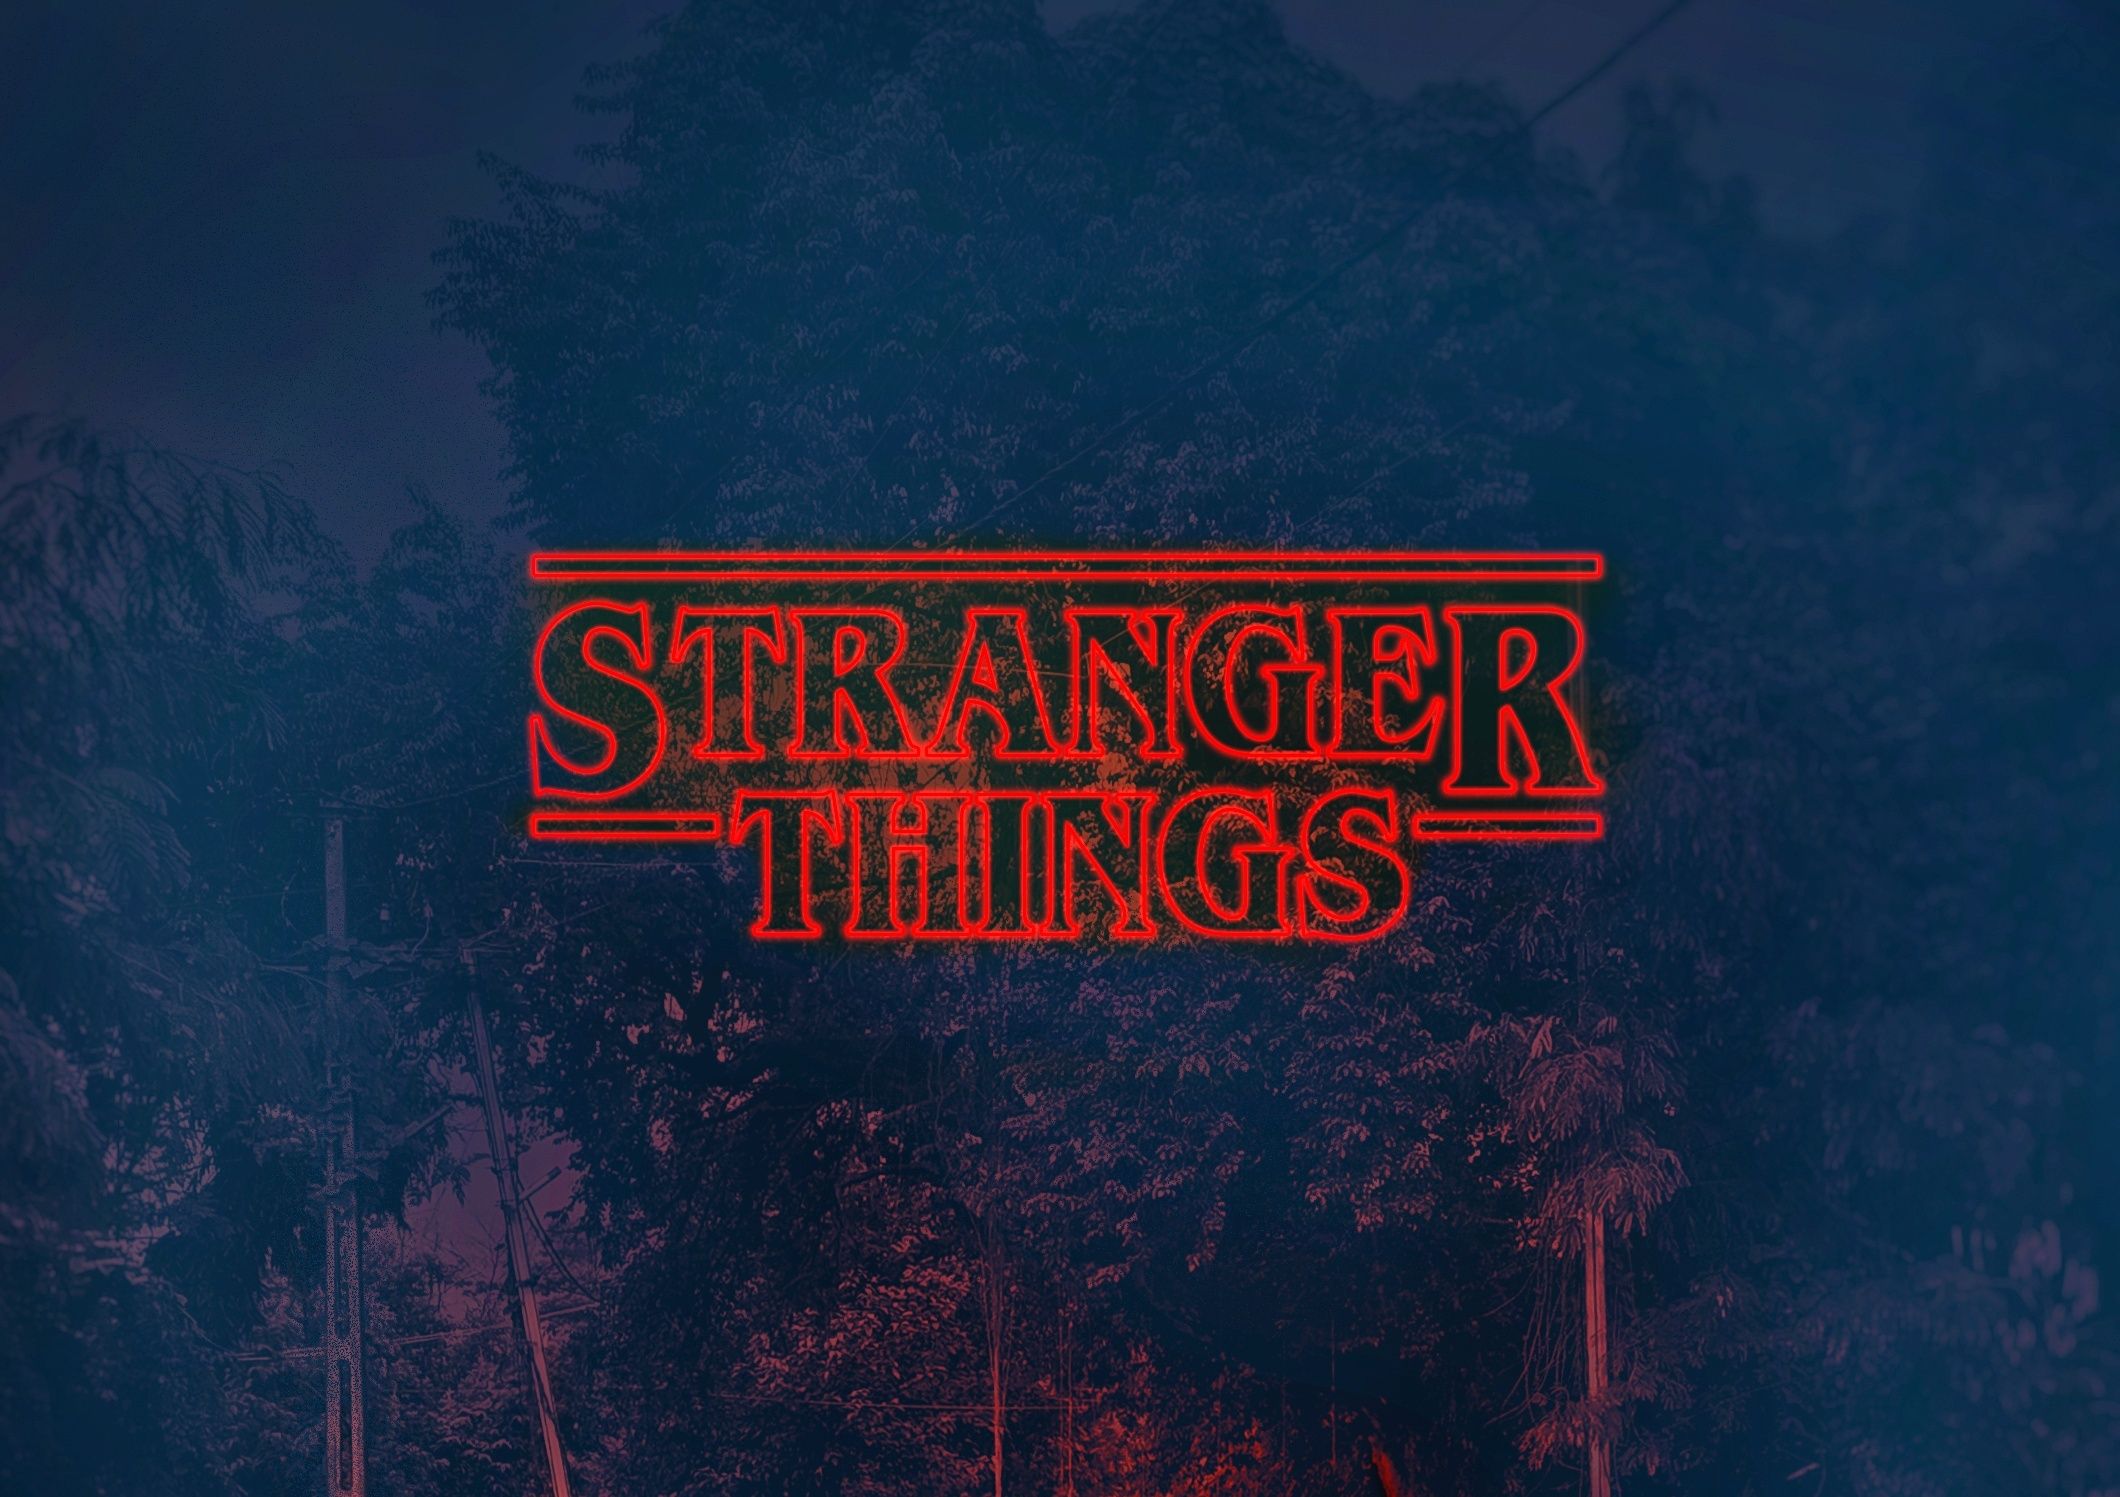 Stranger Things  Framed TV Poster Infographic  Quotes amp Pictos  24034 X 36034  eBay